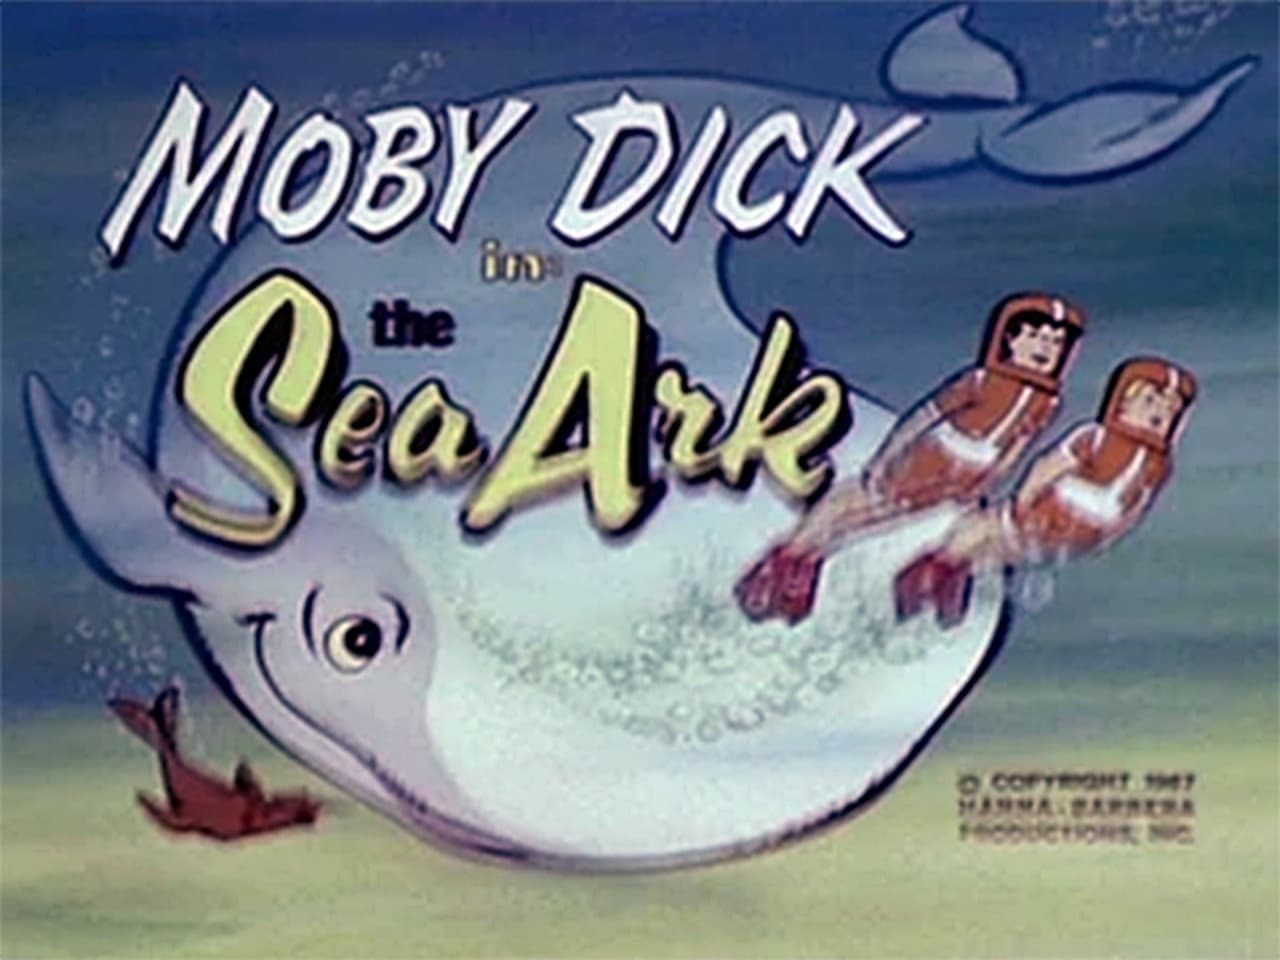 The Sea Ark